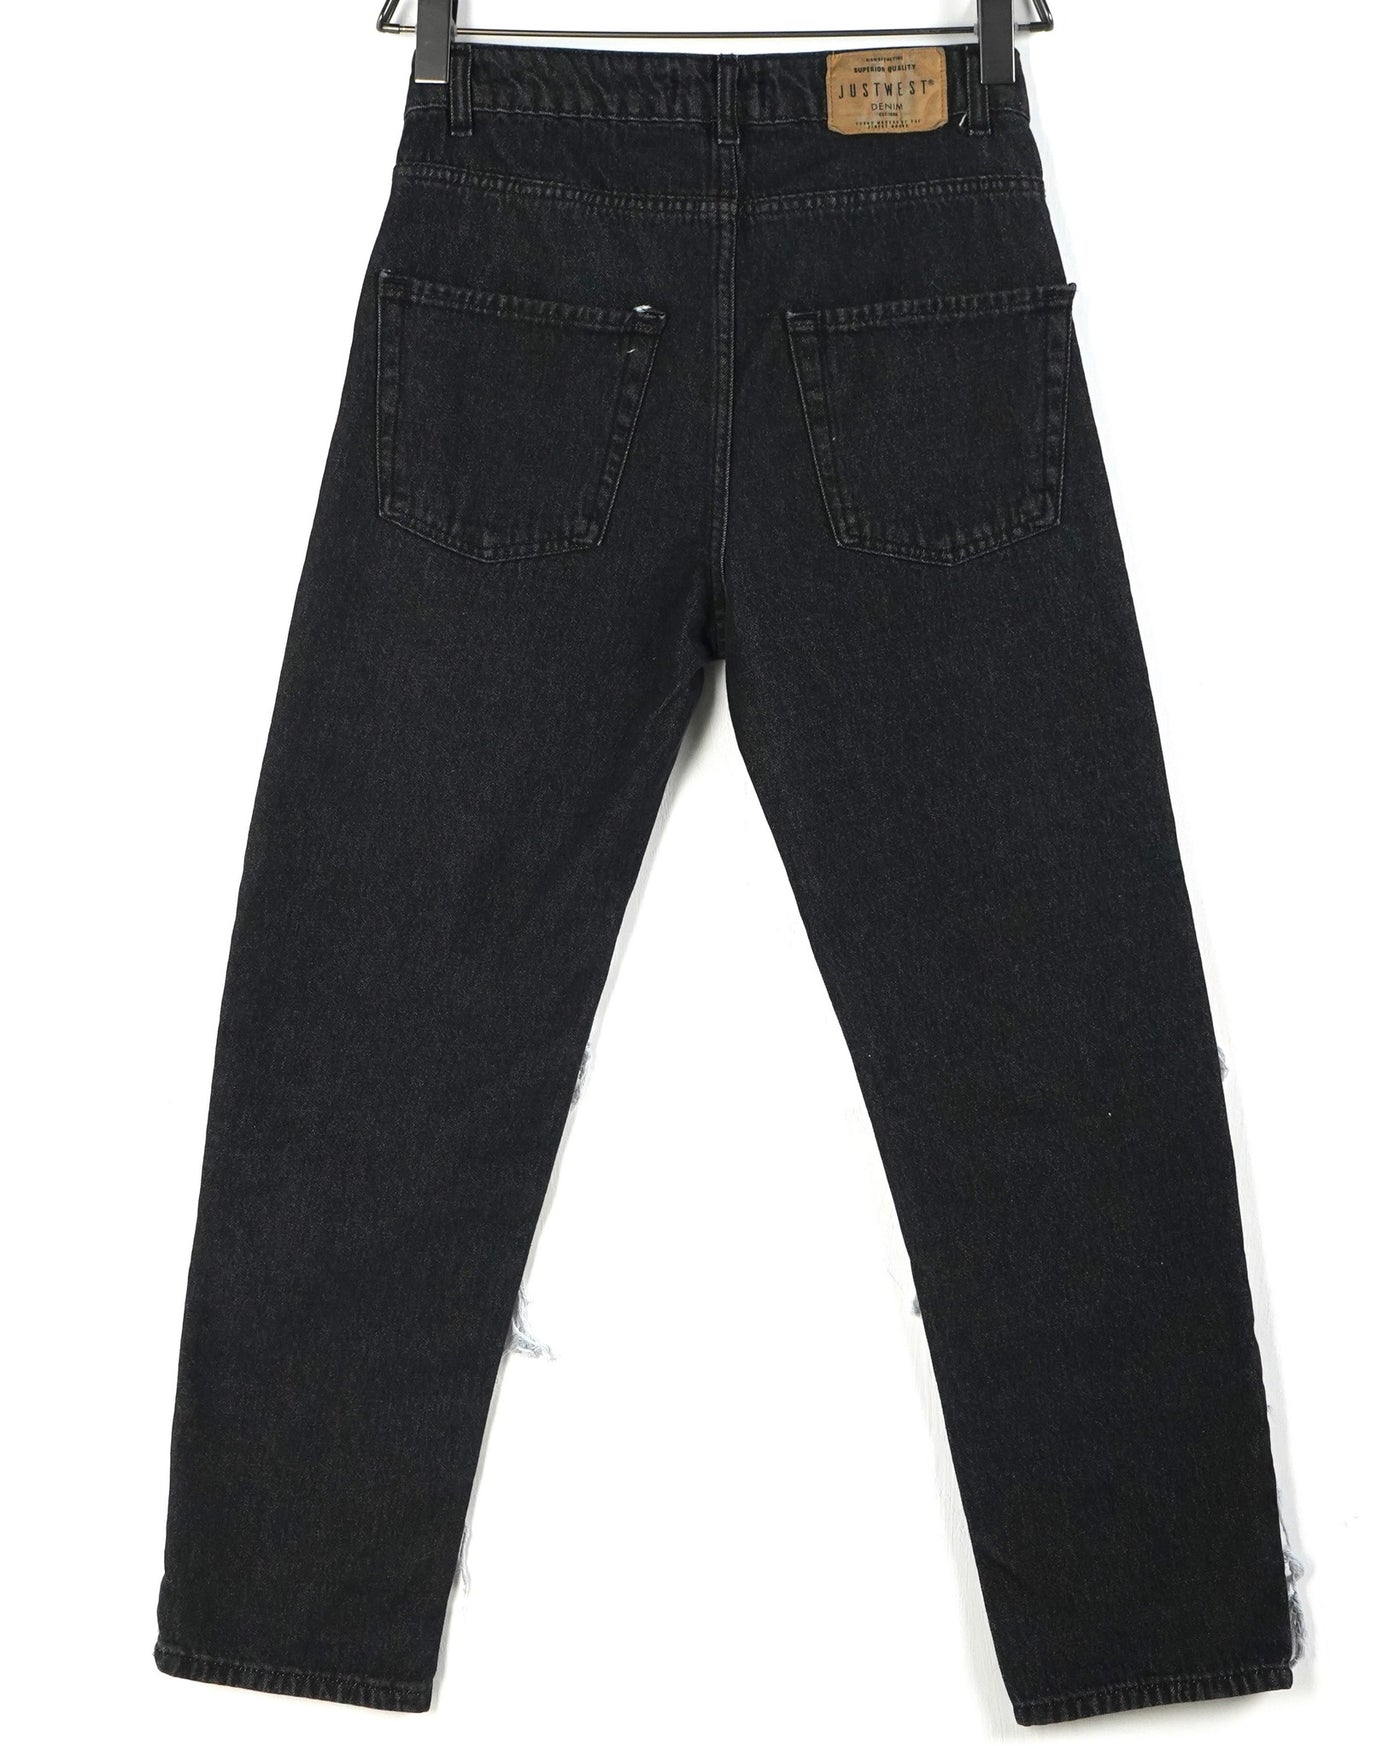 jeans antangost